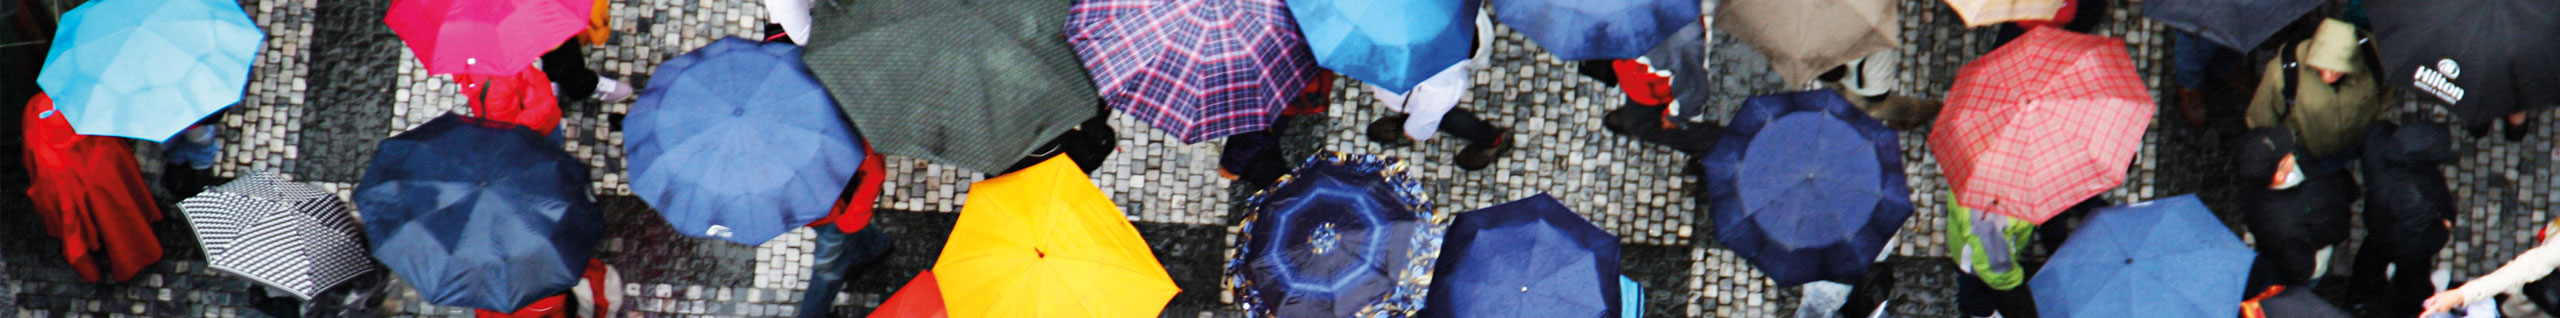 Bunte Regenschirme in Makroaufnahme